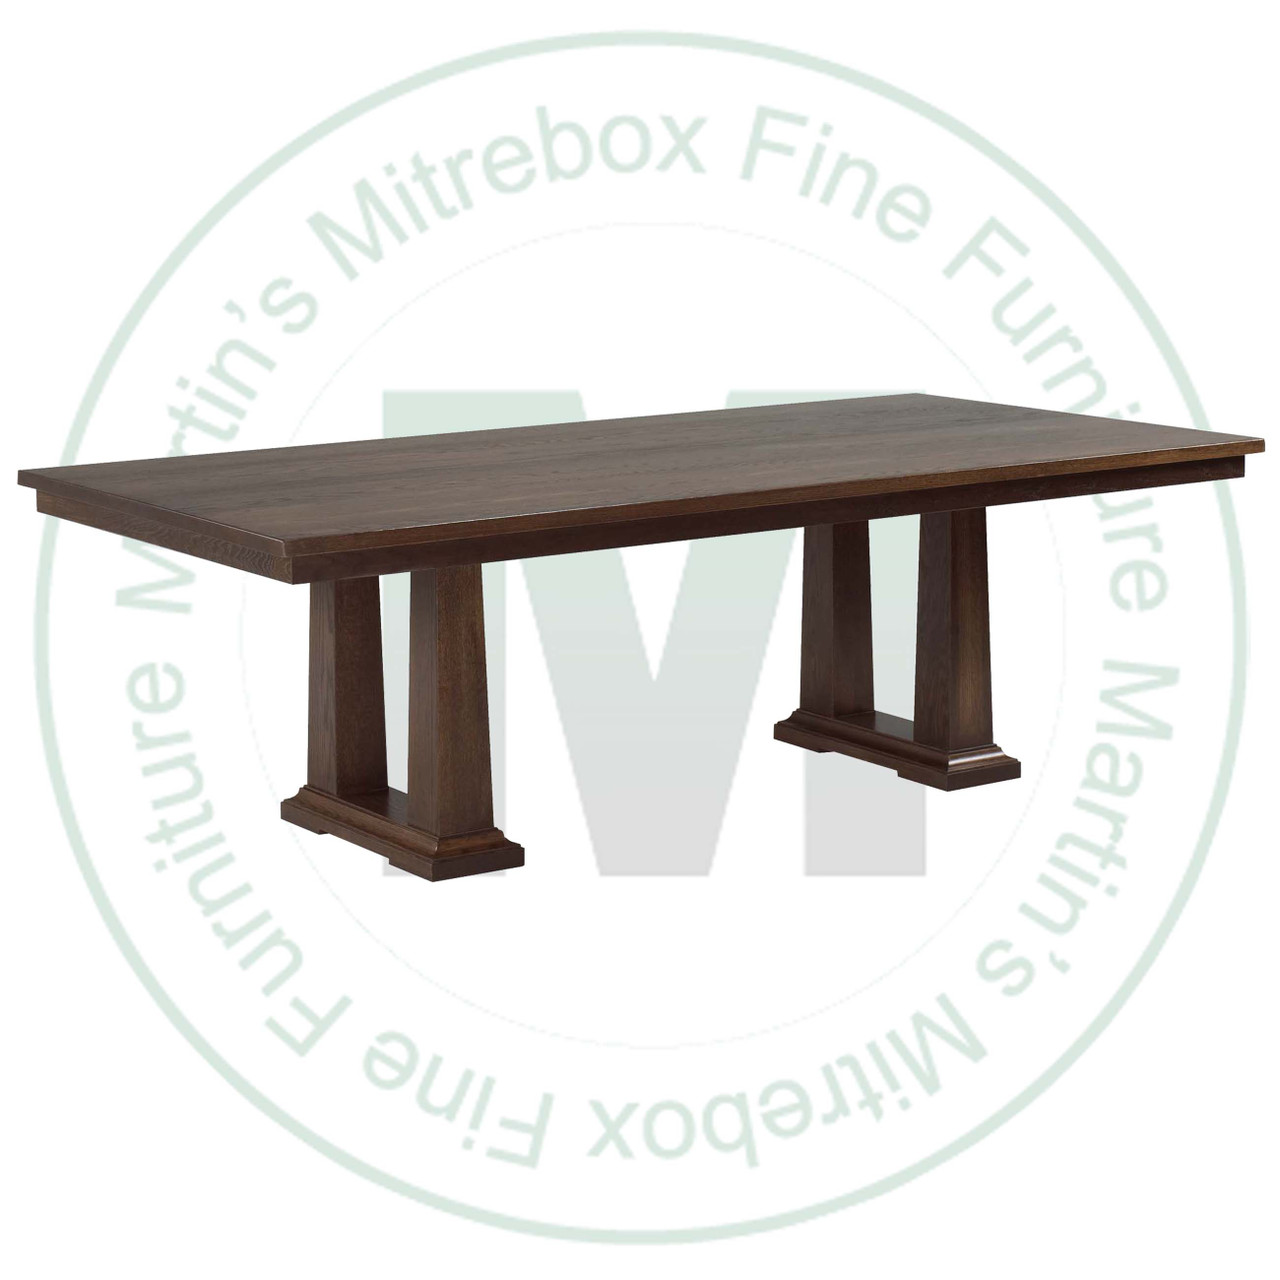 Oak Acropolis Solid Top Double Pedestal Table 48''D x 96''W x 30''H Table Has 1.75'' Thick Top